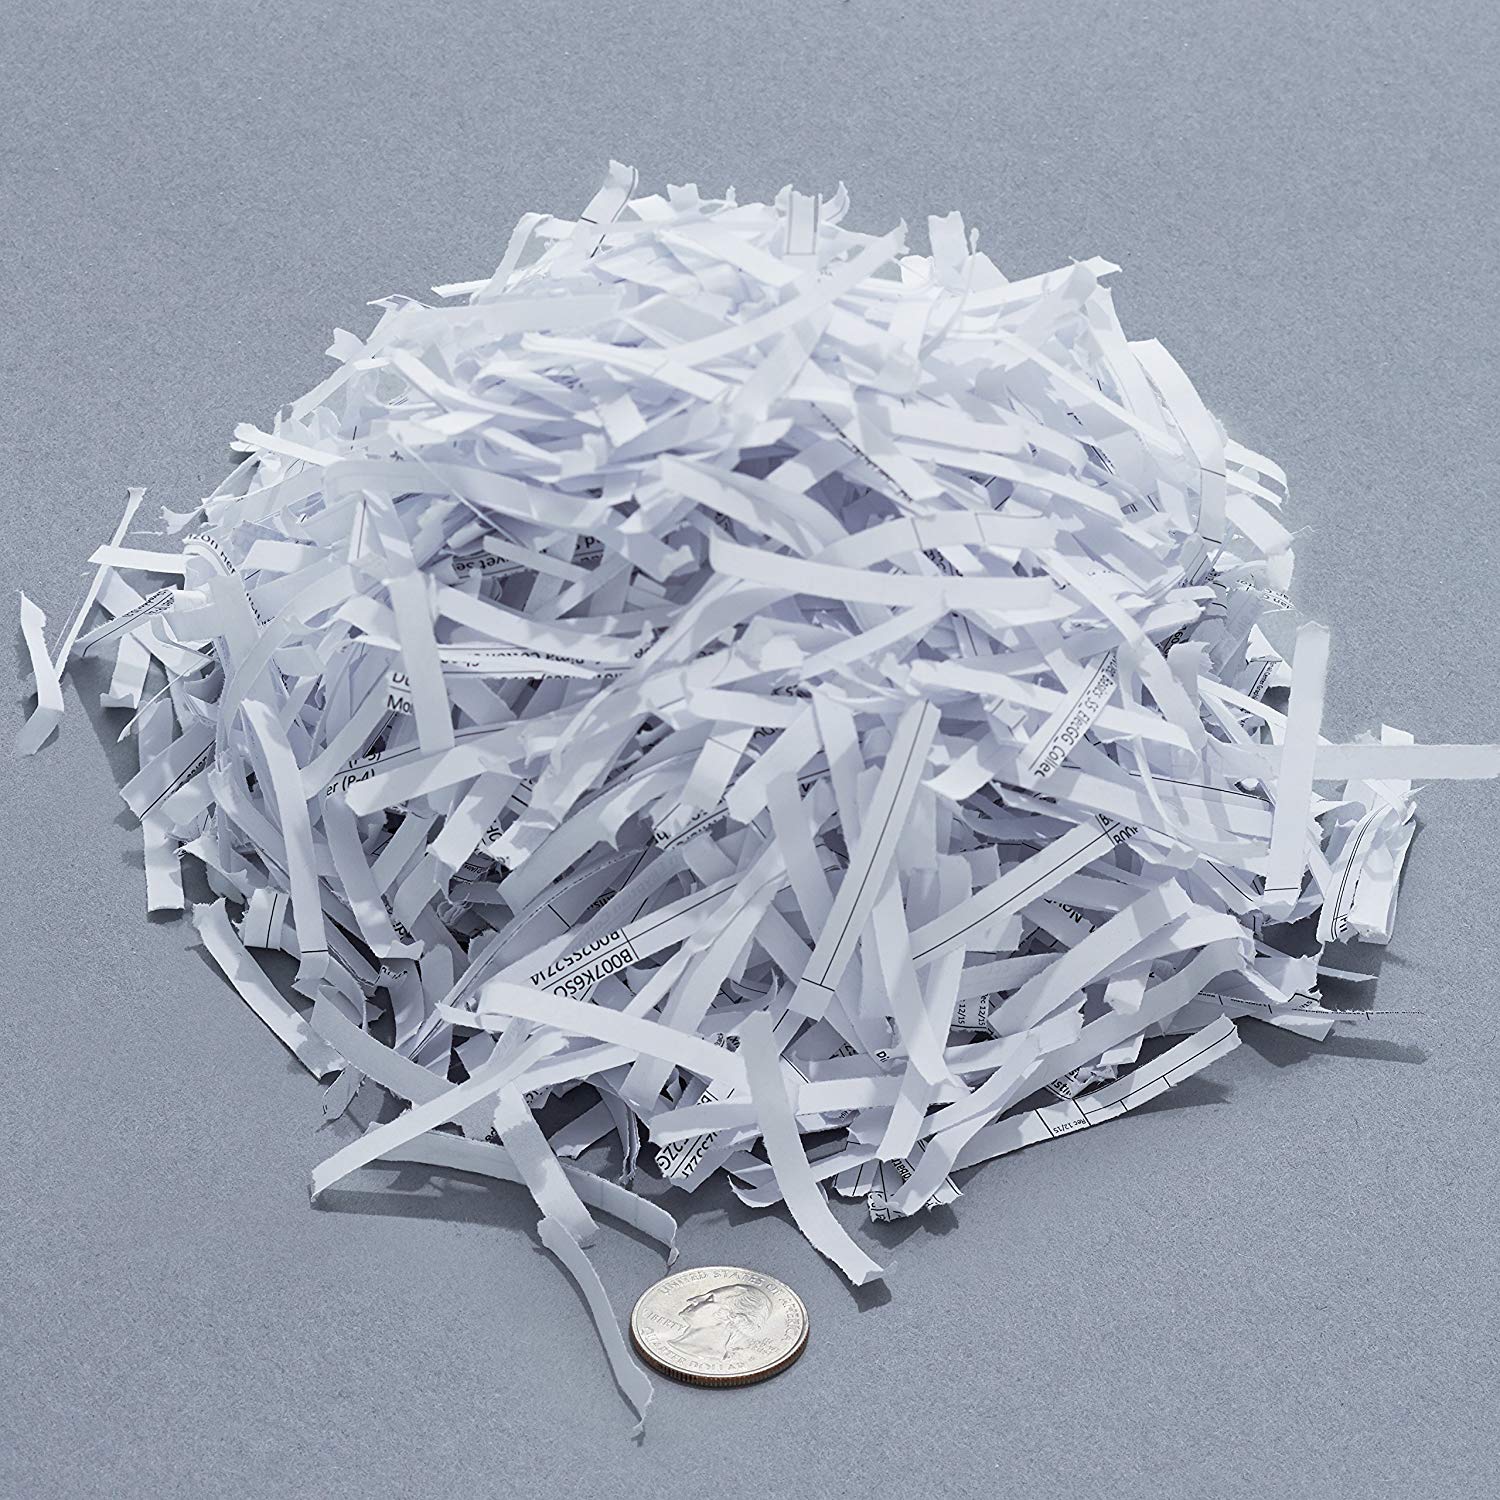 AmazonBasics 5-6 Sheet Cross Cut paper and credit card shredder